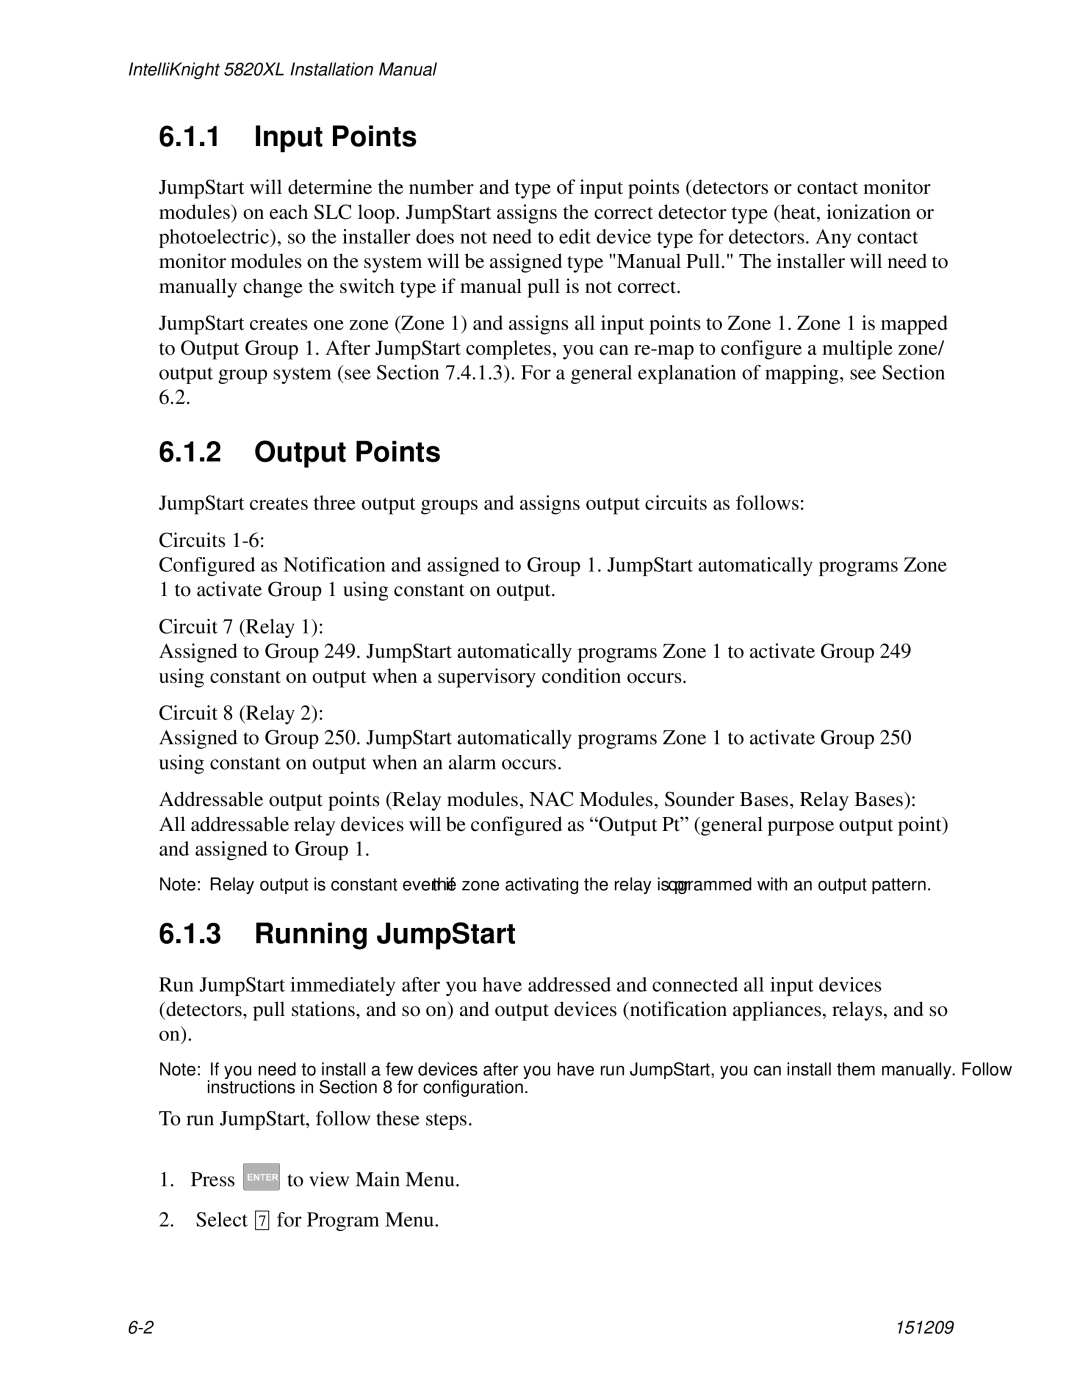 Honeywell 5820XL manual Input Points, Output Points, Running JumpStart 